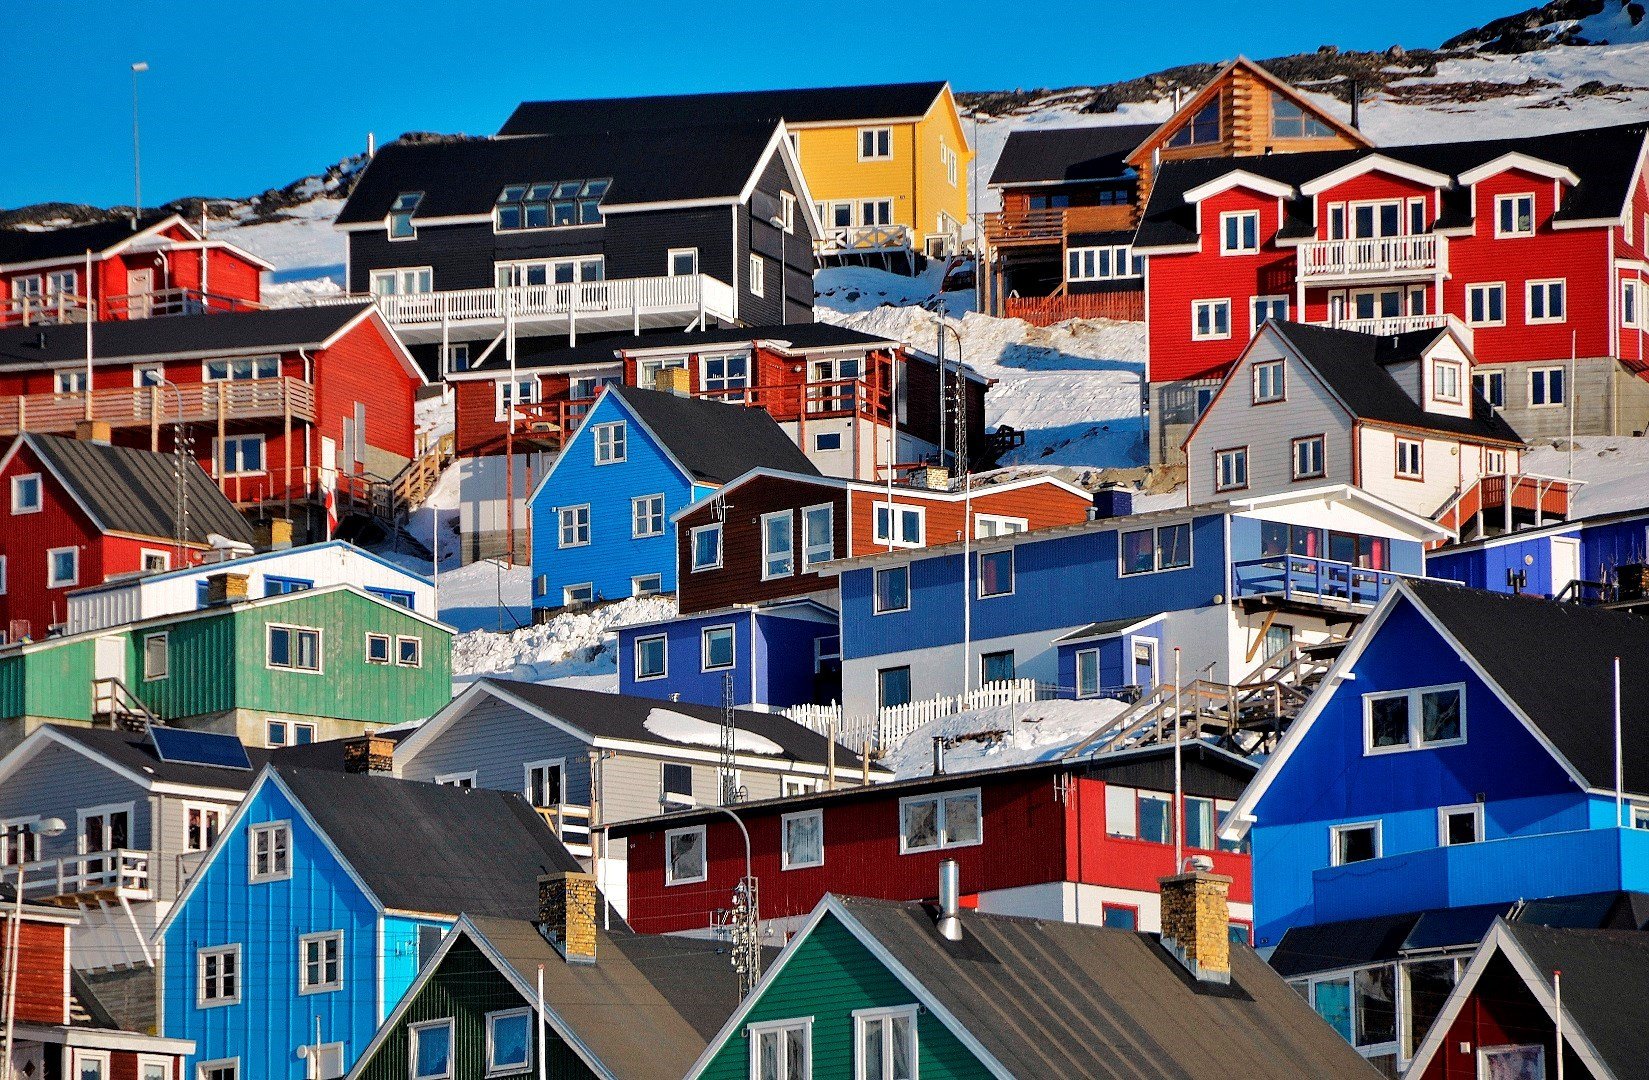 North town. Гренландия столица Нуук. Поселение Нуук Гренландия. Юлианехоб Гренландия. Какорток Южная Гренландия.